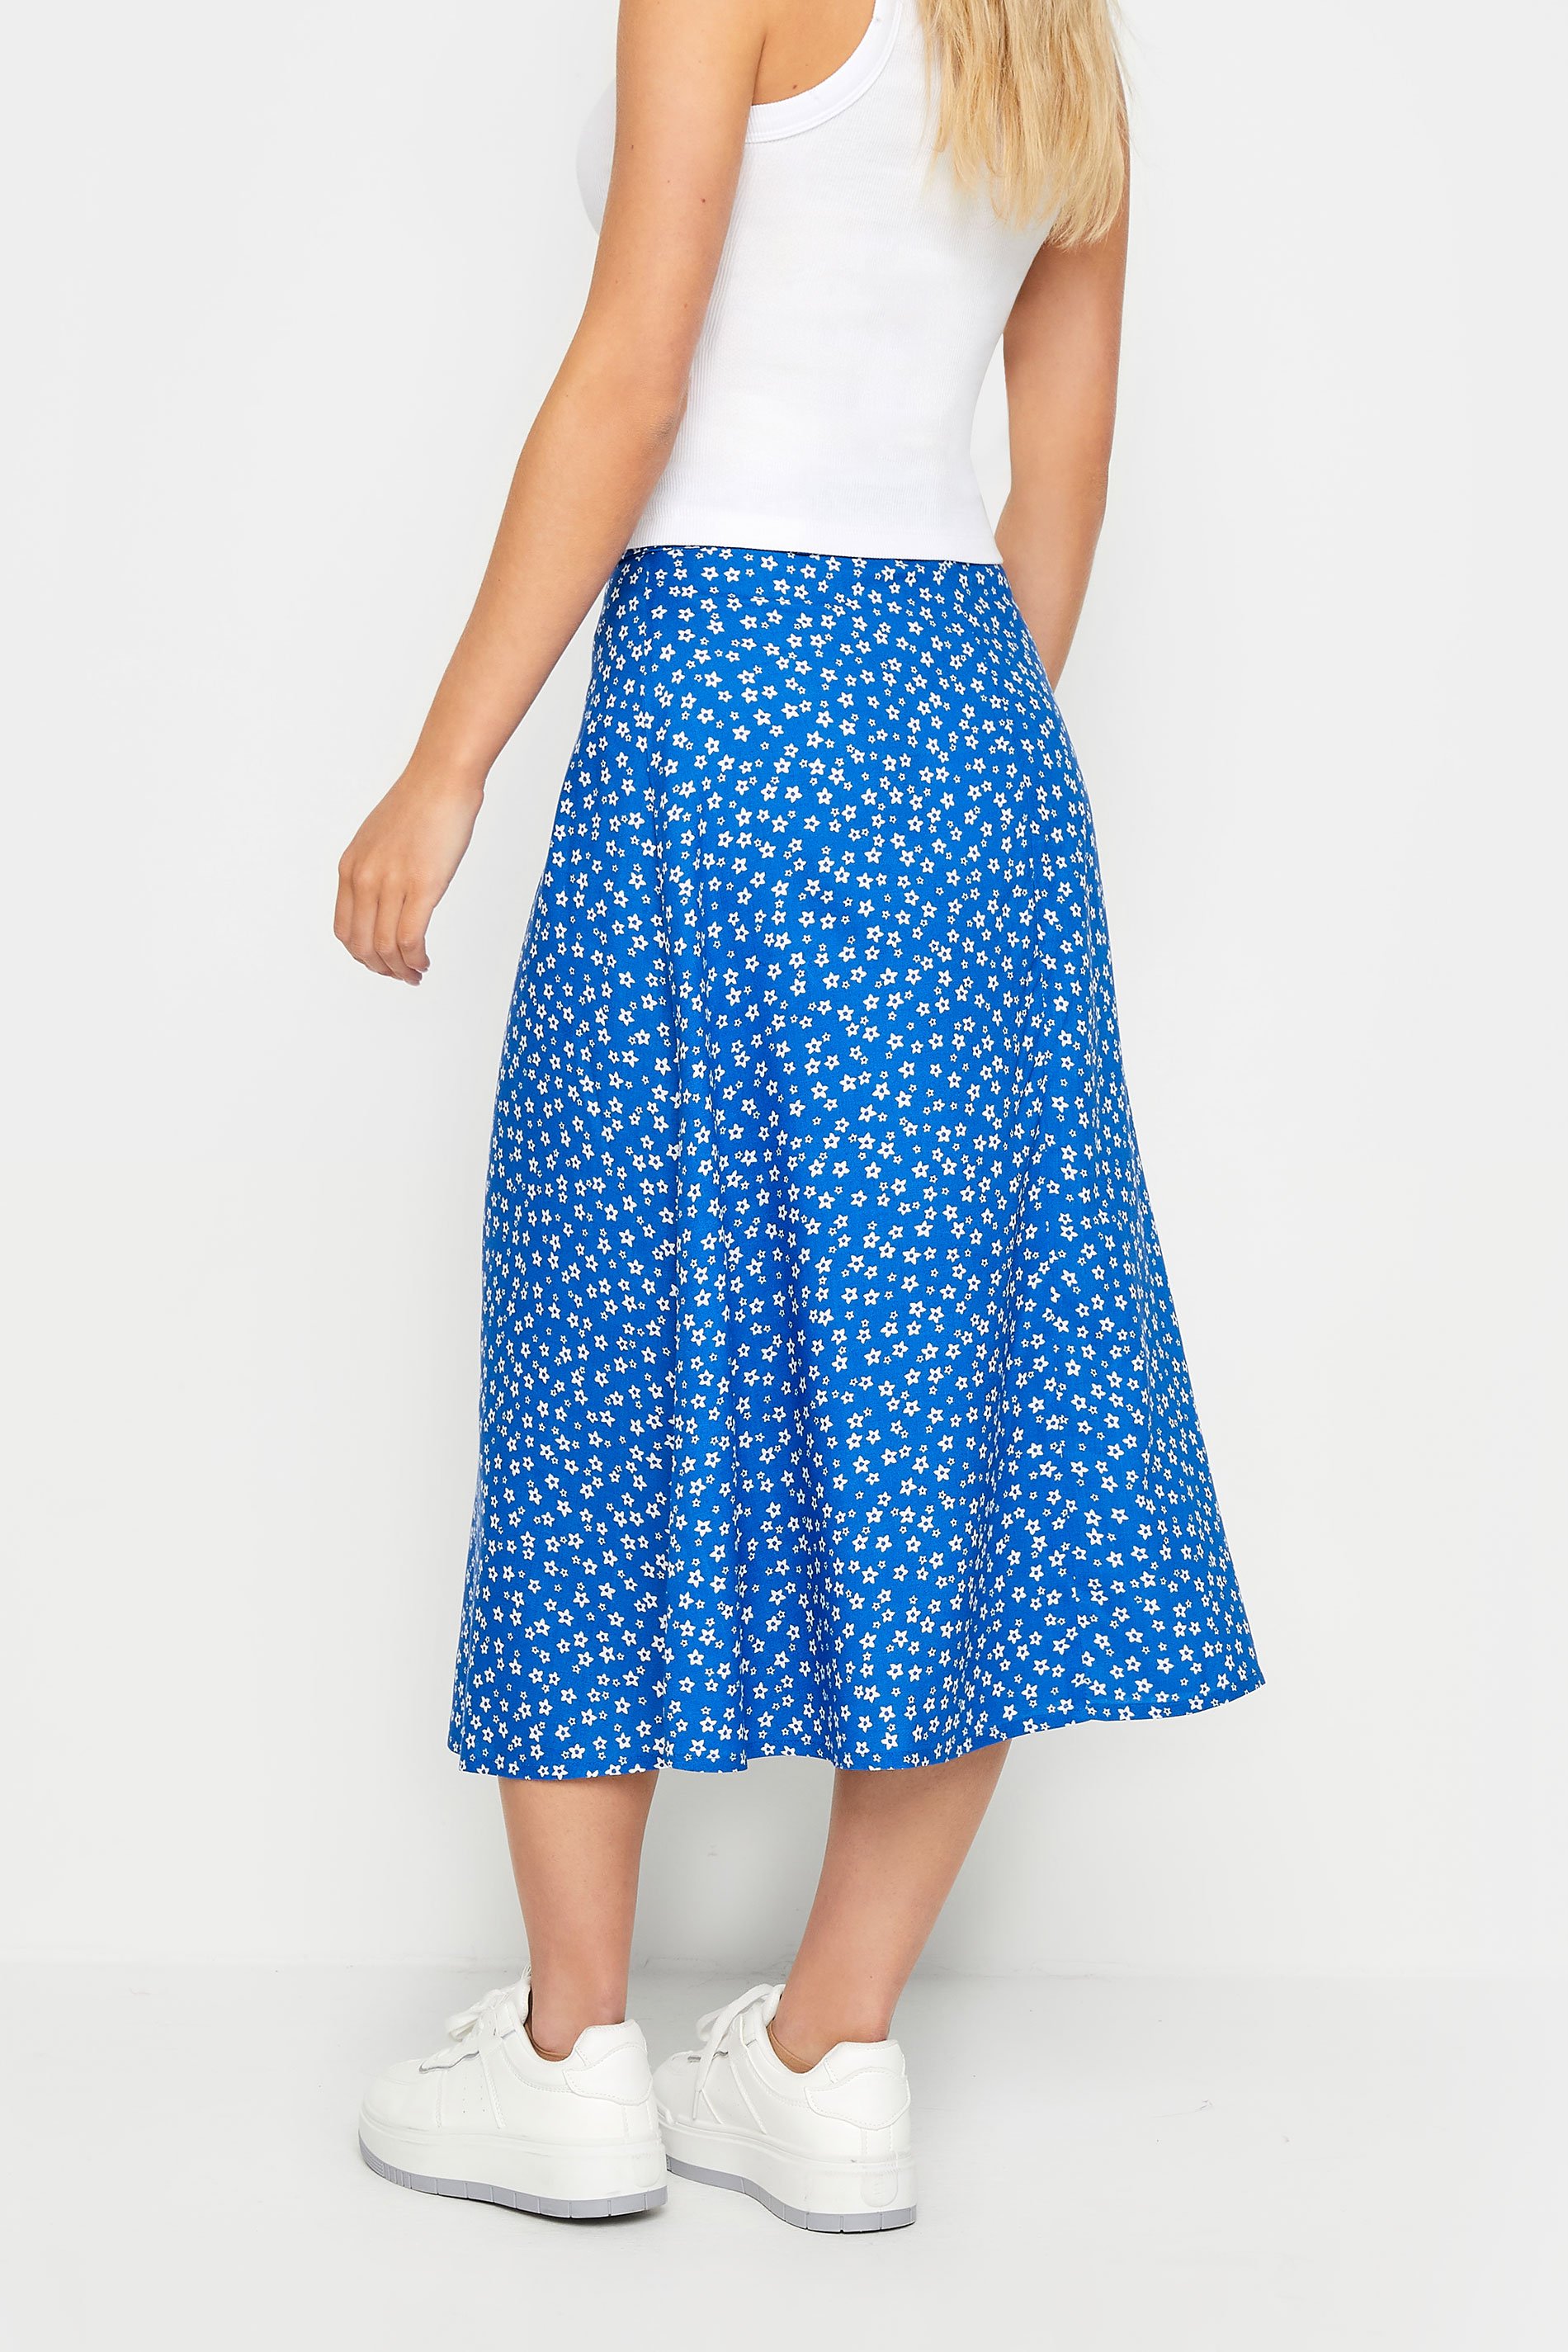 PixieGirl Petite Women's Blue Ditsy Floral Print Midi Skirt | PixieGirl 3